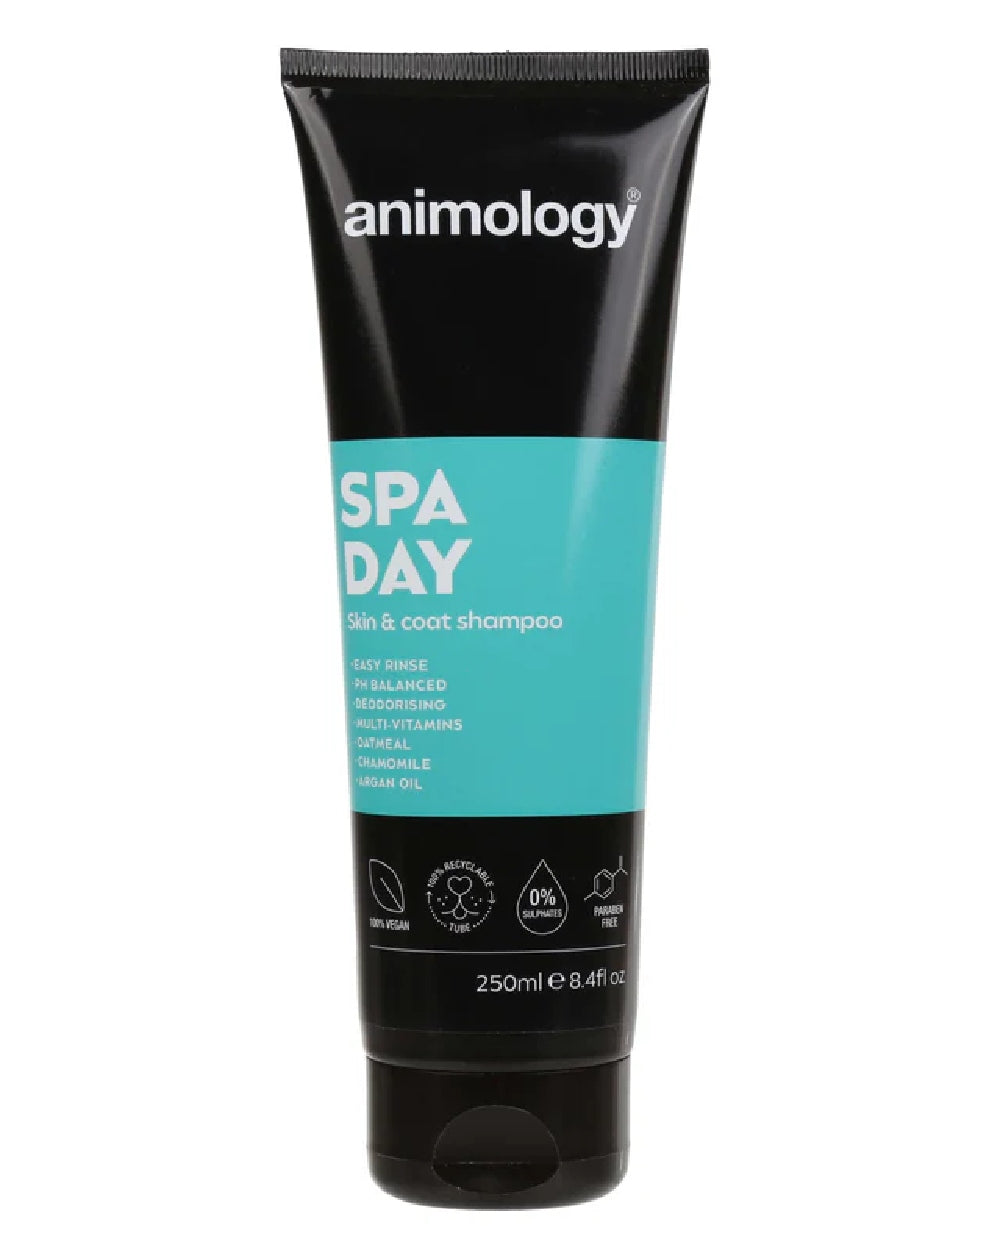 Animology Spa Day Shampoo 250ml on white background